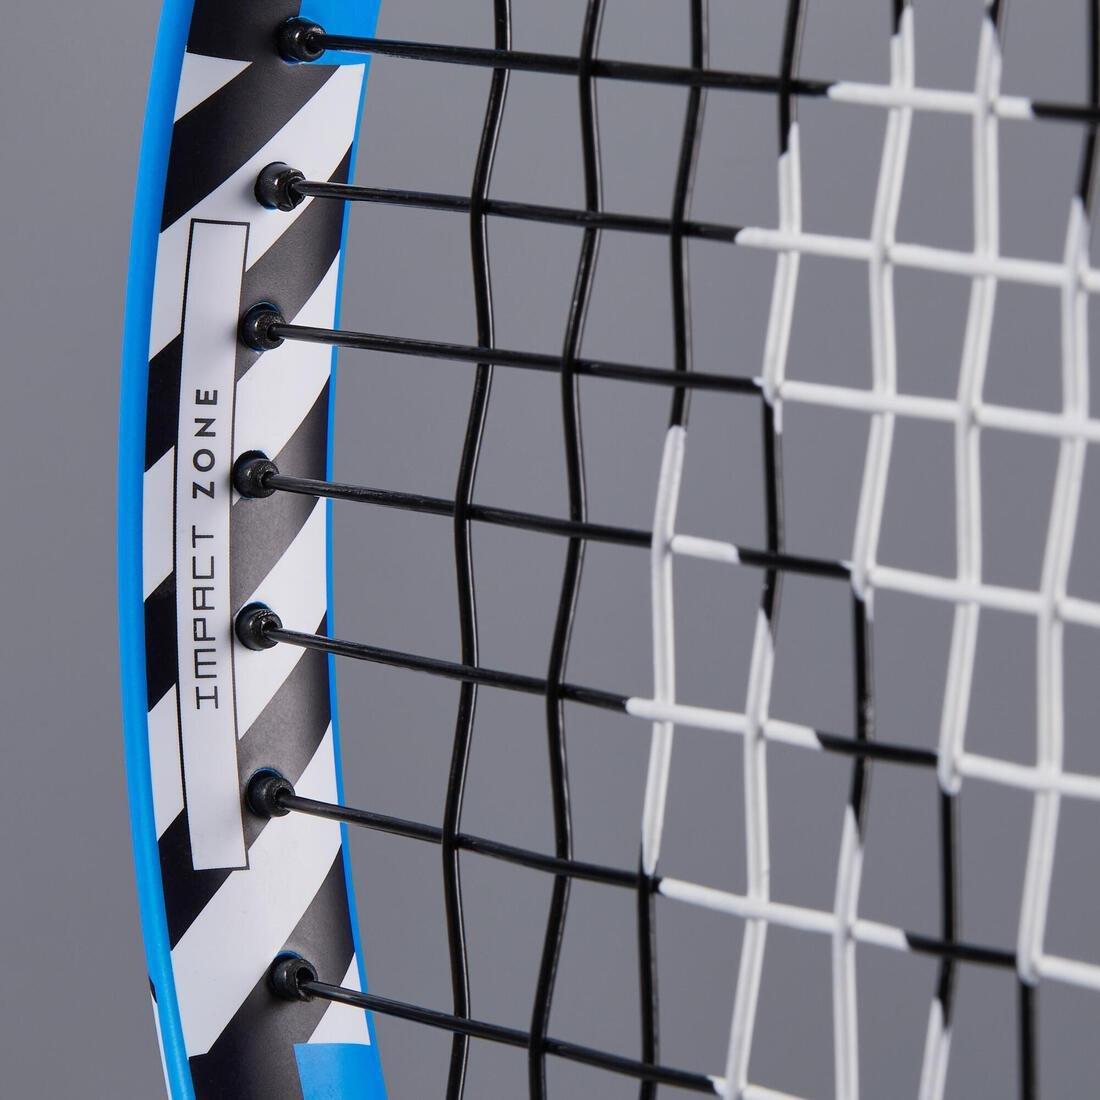 ARTENGO - Kids' 17 Tennis Racket TR130 - Blue